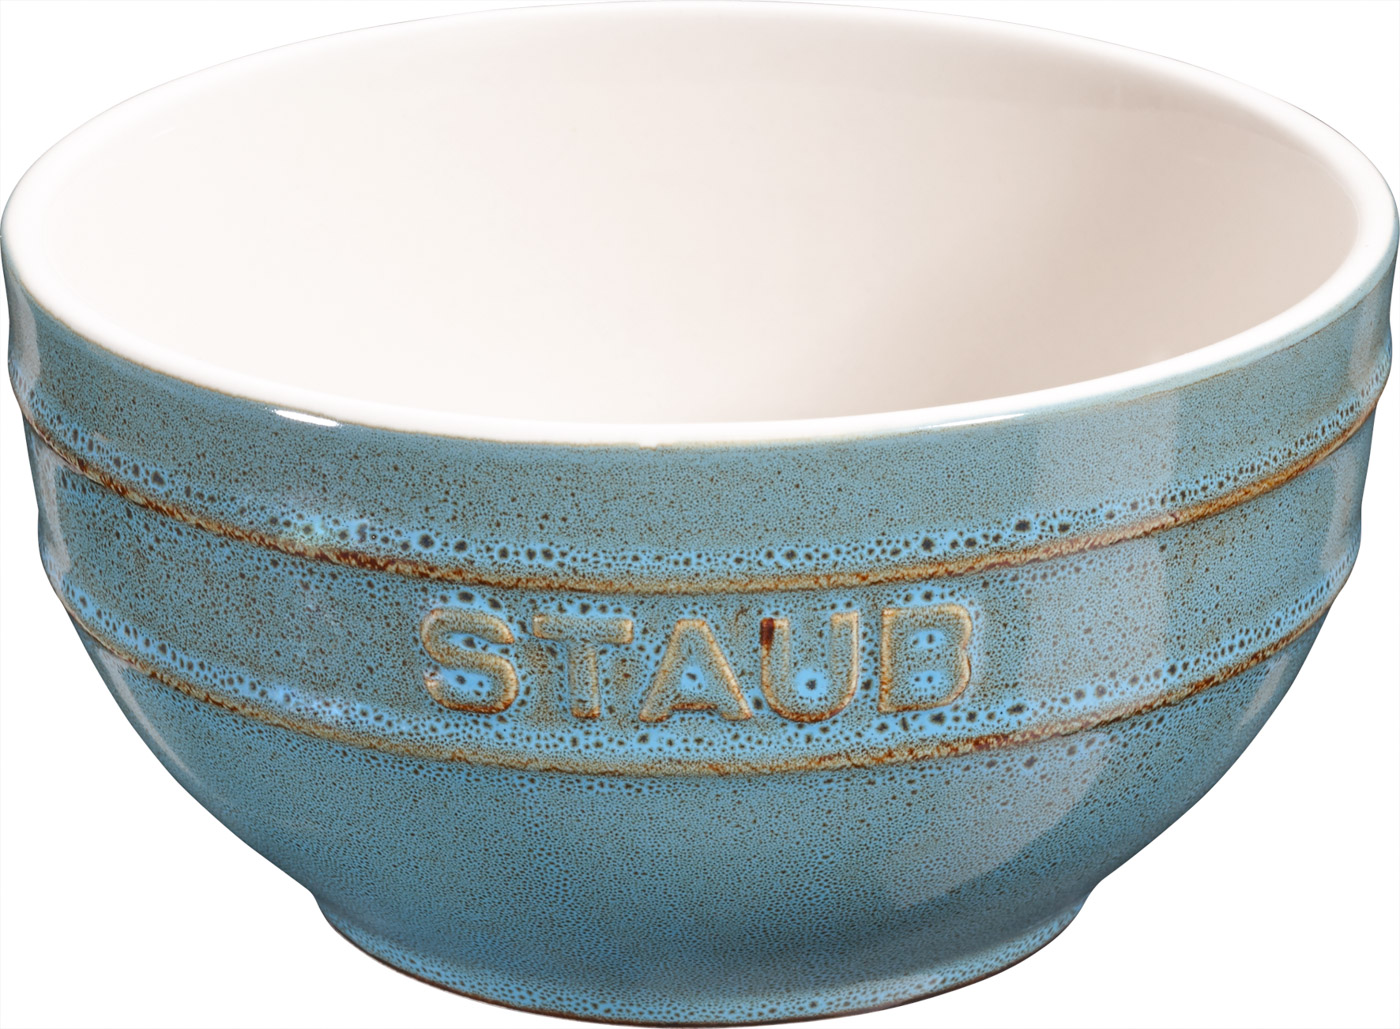 Schüssel, 14 cm, Antik-Türkis, Keramik, Serie: Ceramique. Marke: Staub